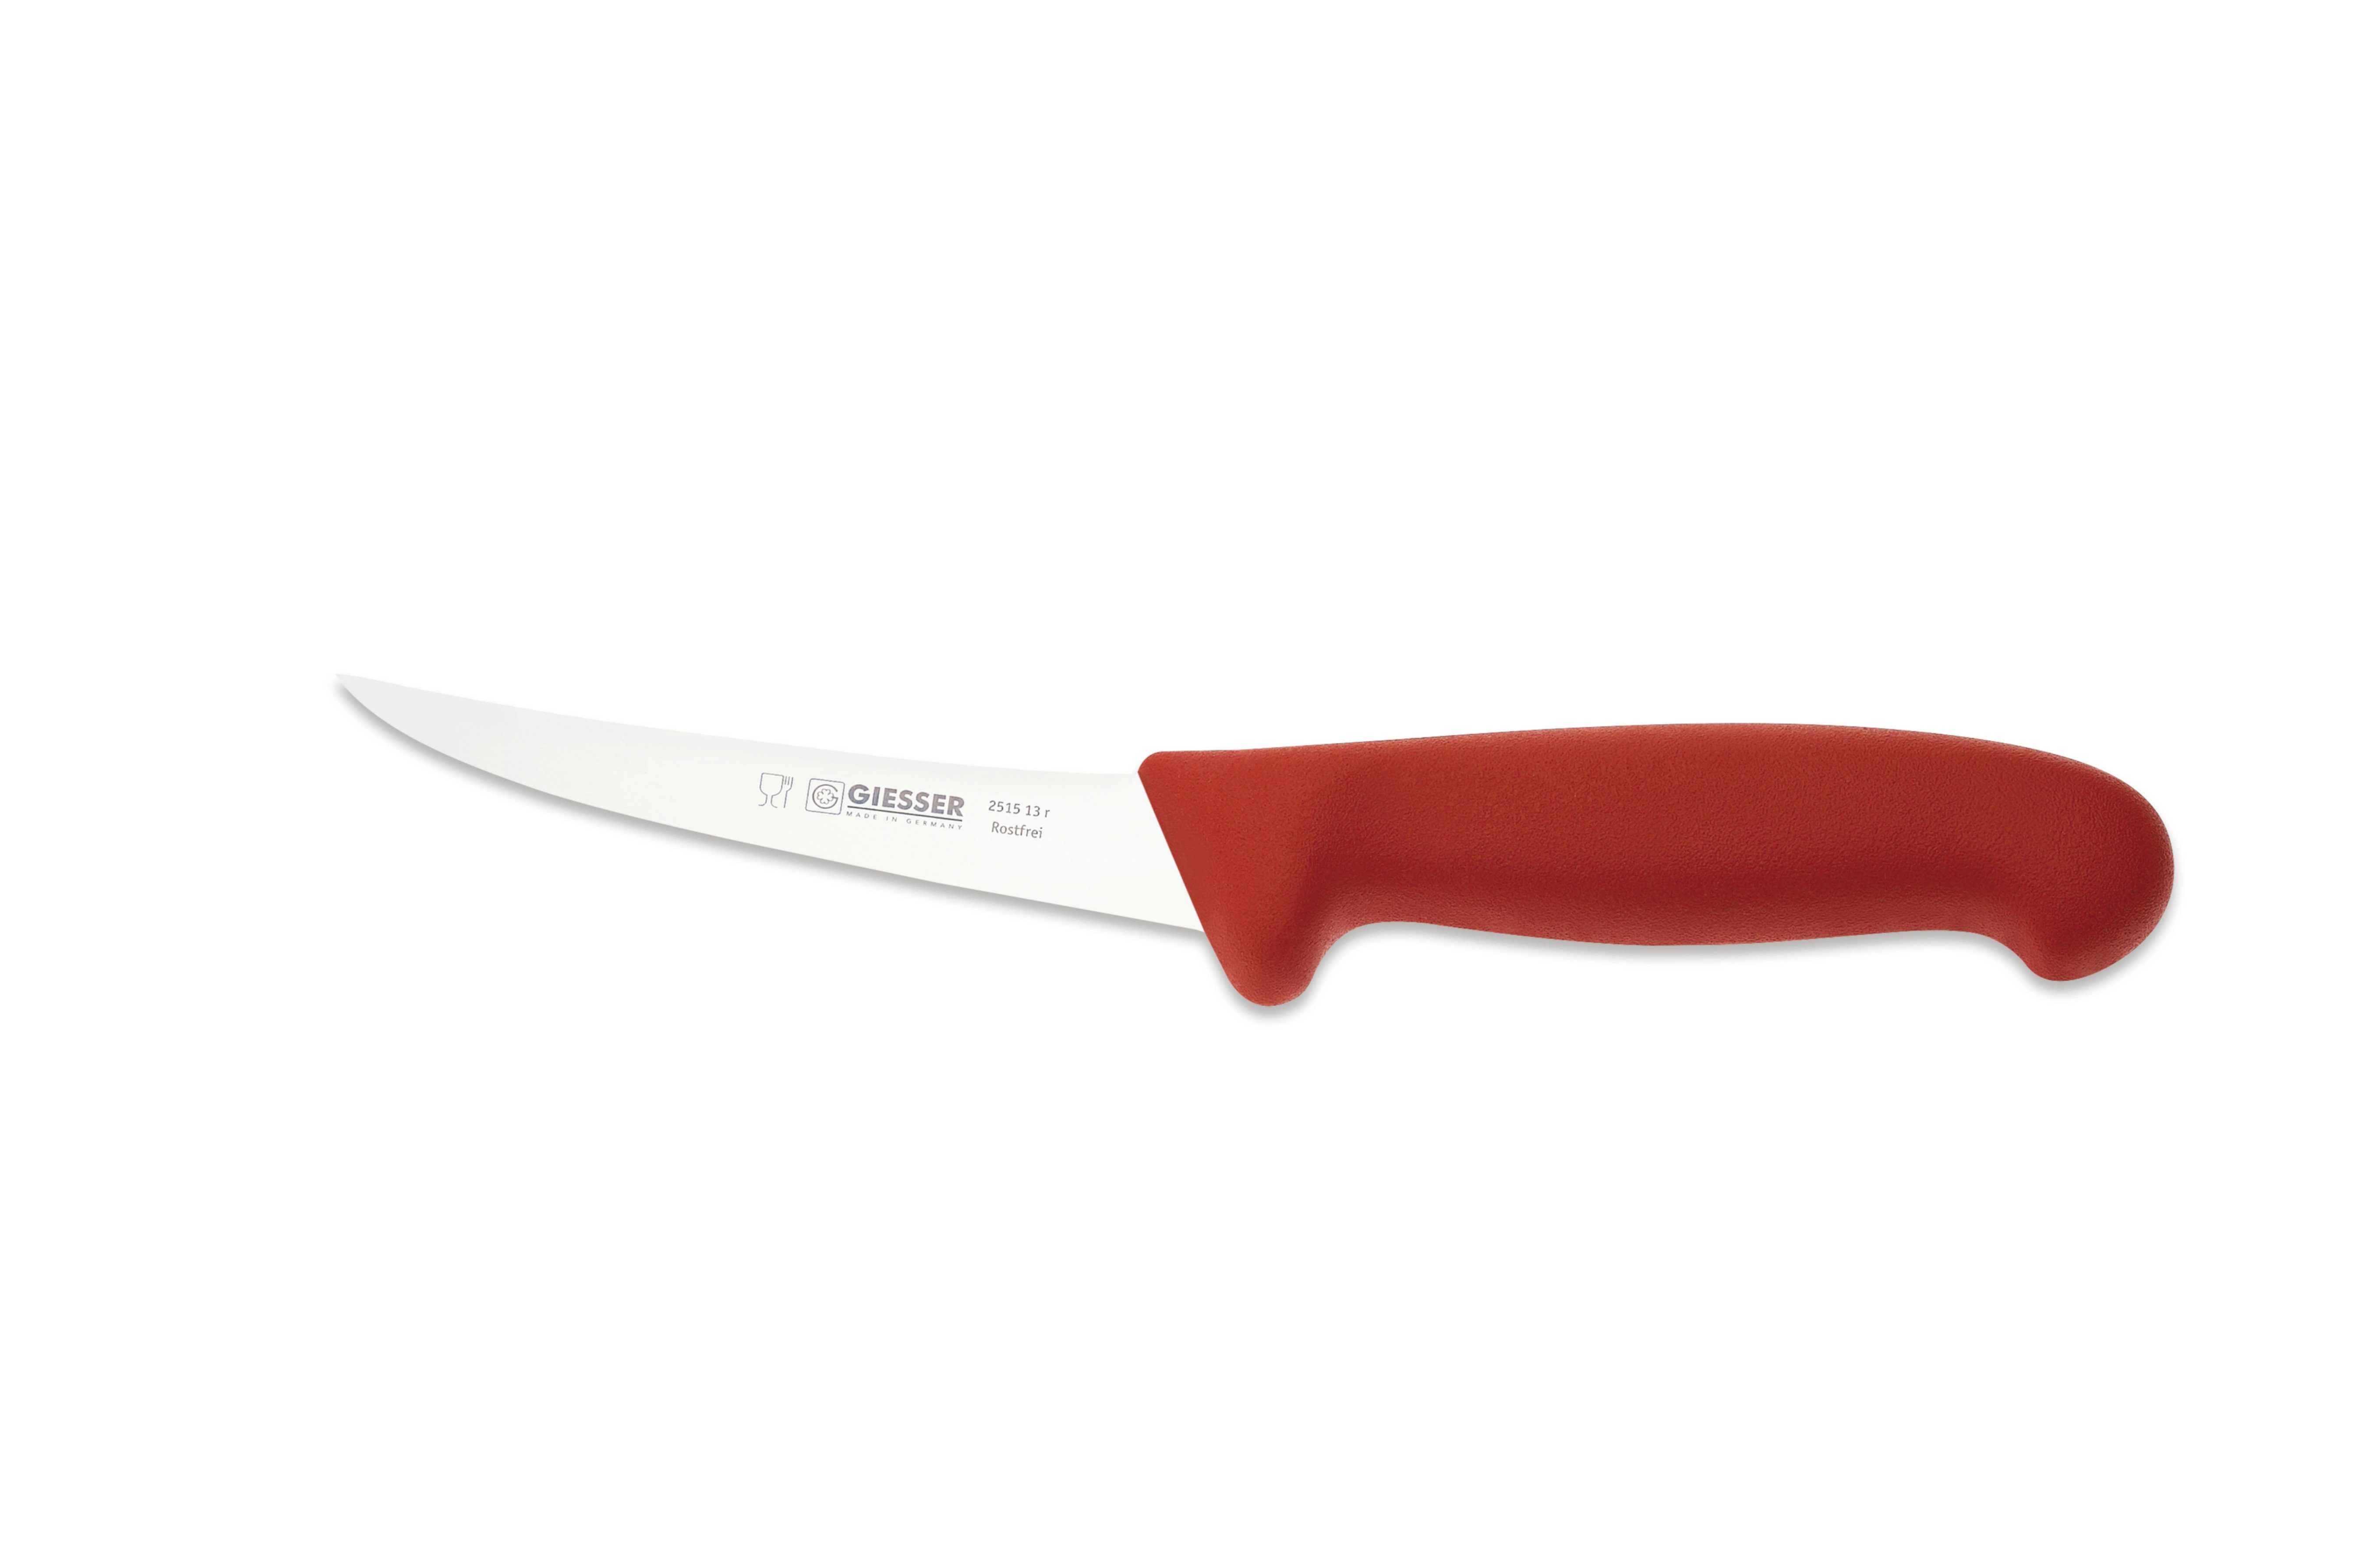 2505 Klingenstärke: stark flexibel, sehr flexibel, Ausbeinmesser Fleischermesser Rot 13-17, Giesser Messer